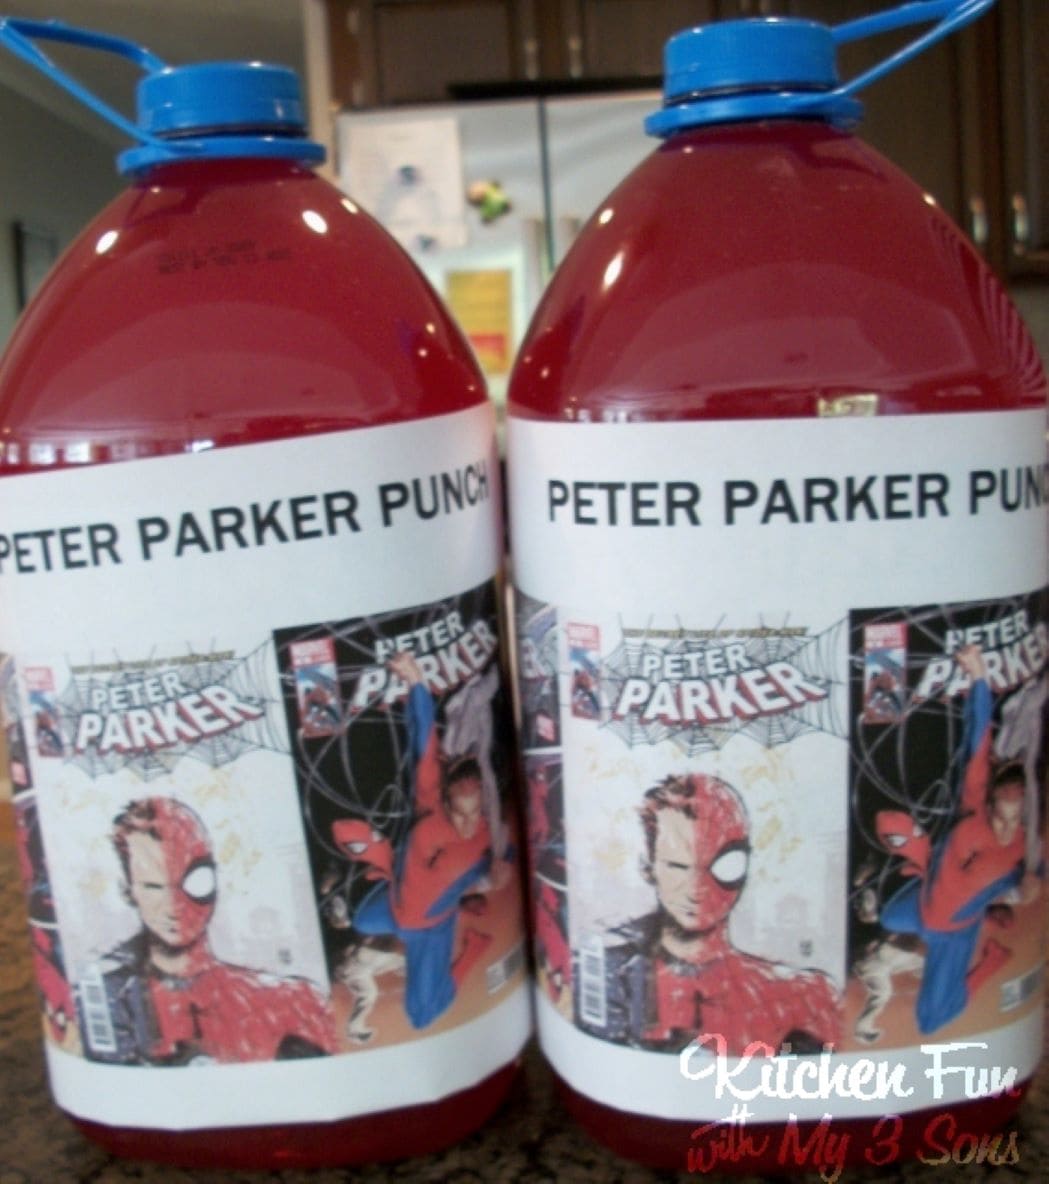 Peter Parker Punch